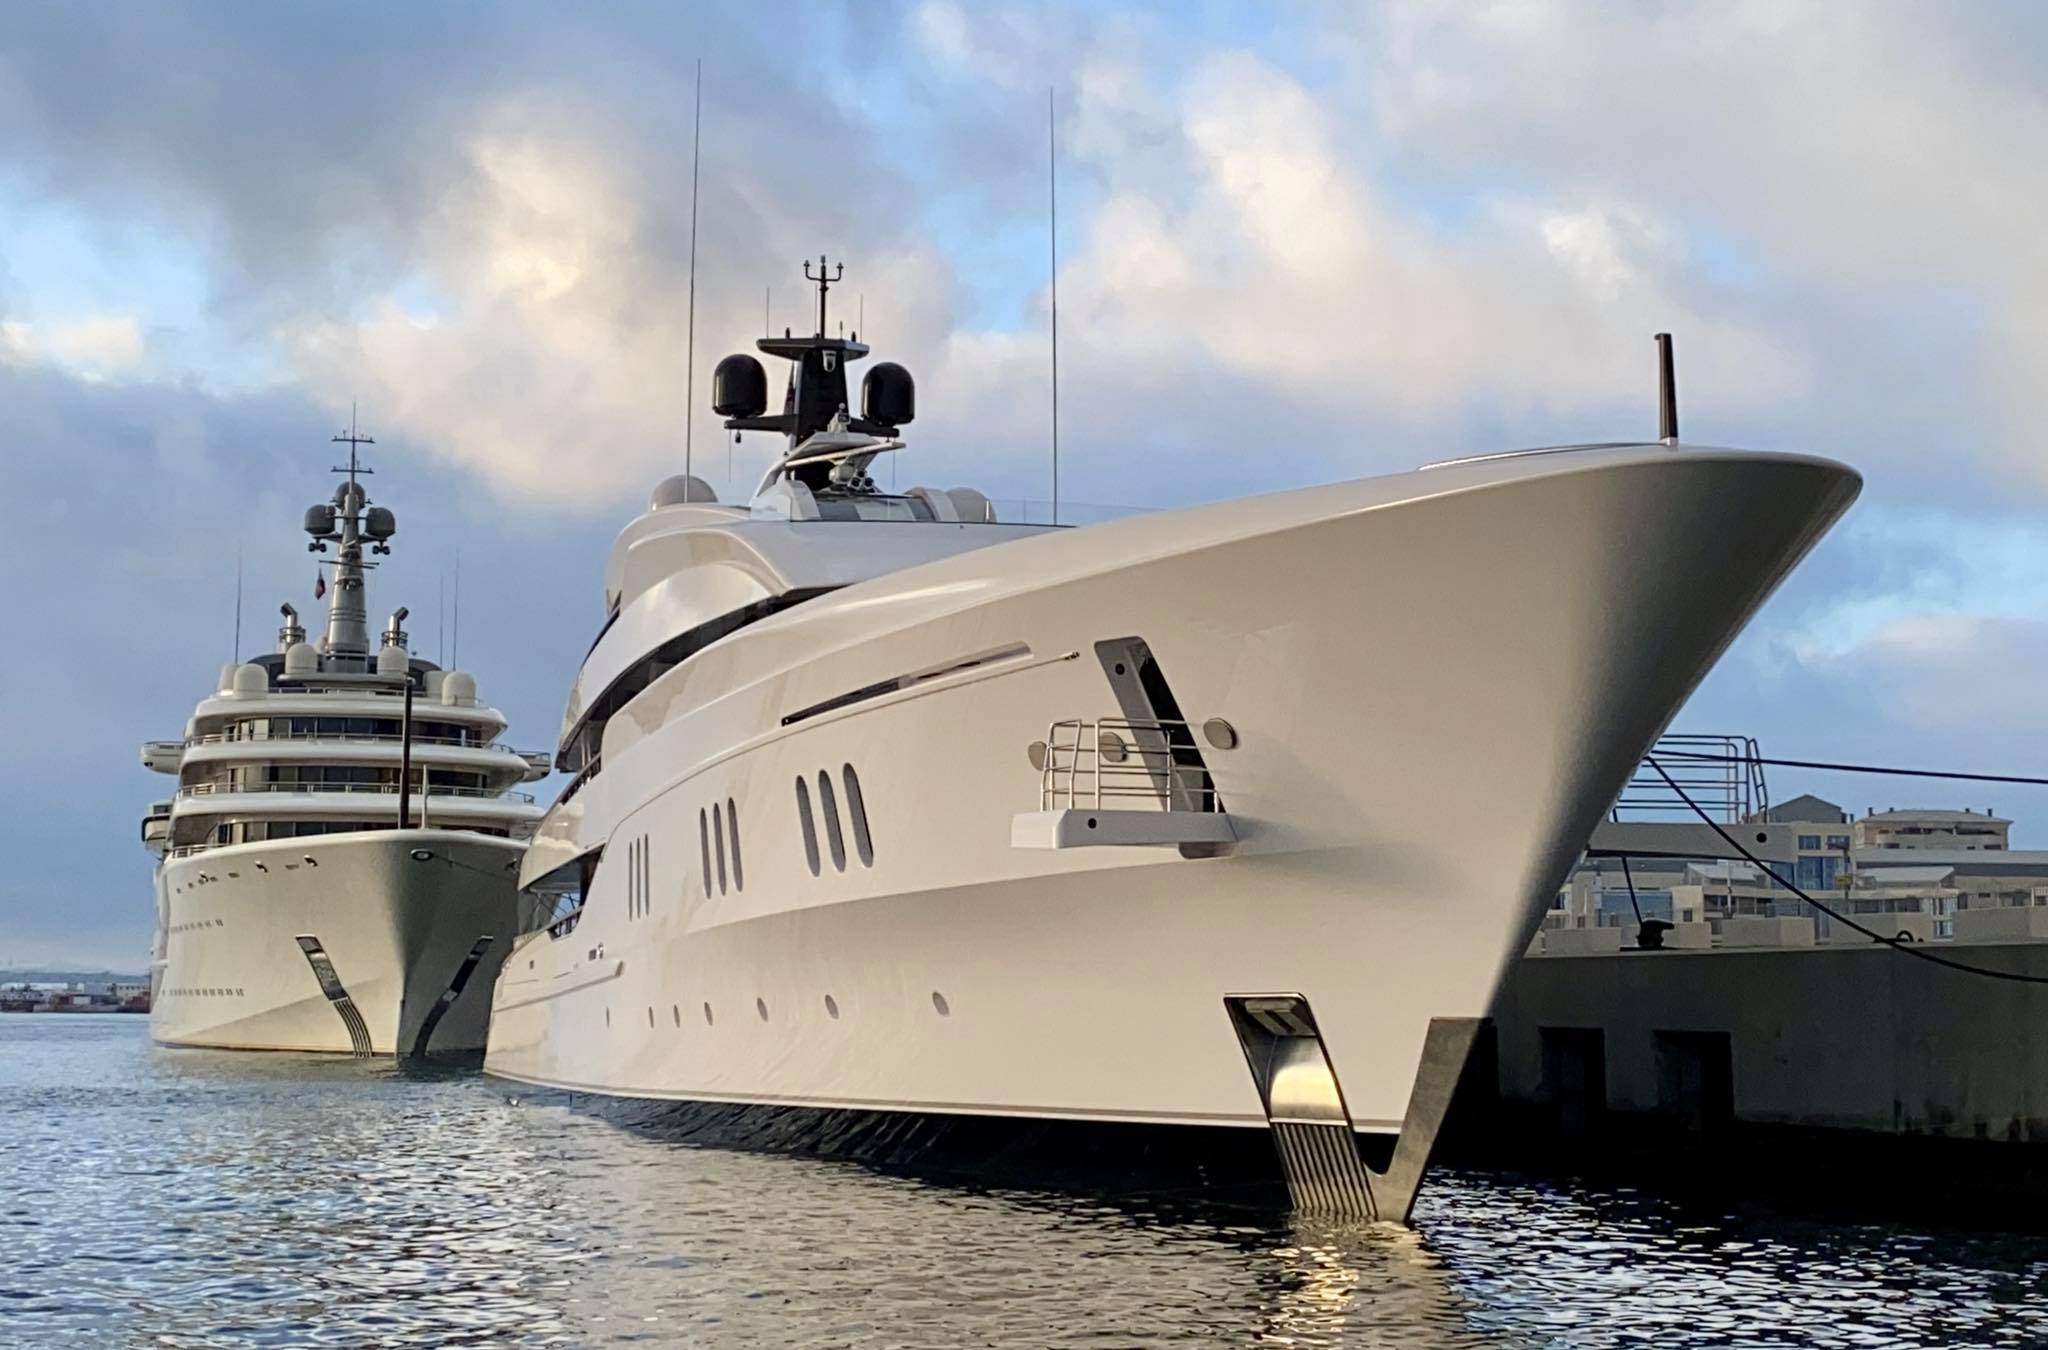 Vanish Yacht – Feadship – 2021 – Besitzer Larry Van Tuyl